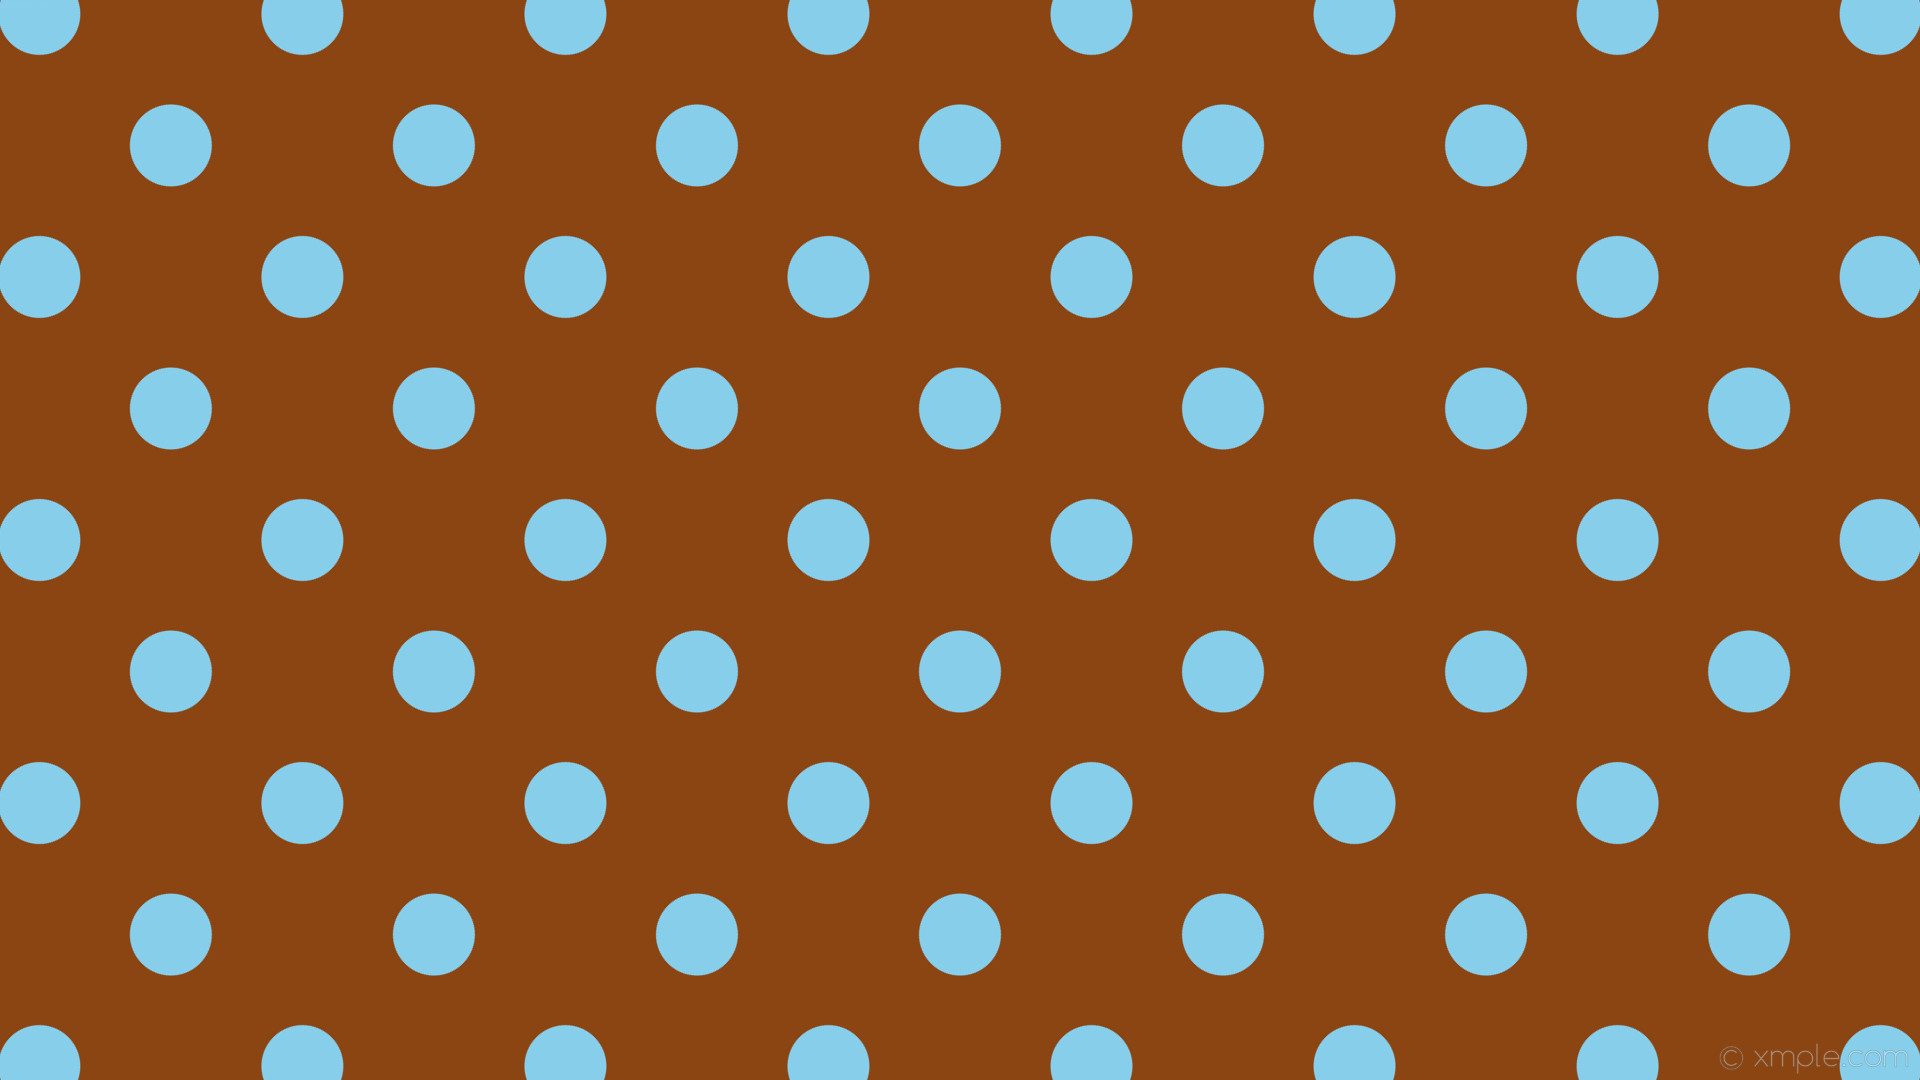 1920x1080 wallpaper spots brown blue dots polka saddle brown sky blue #8b4513 #87ceeb  135Â°